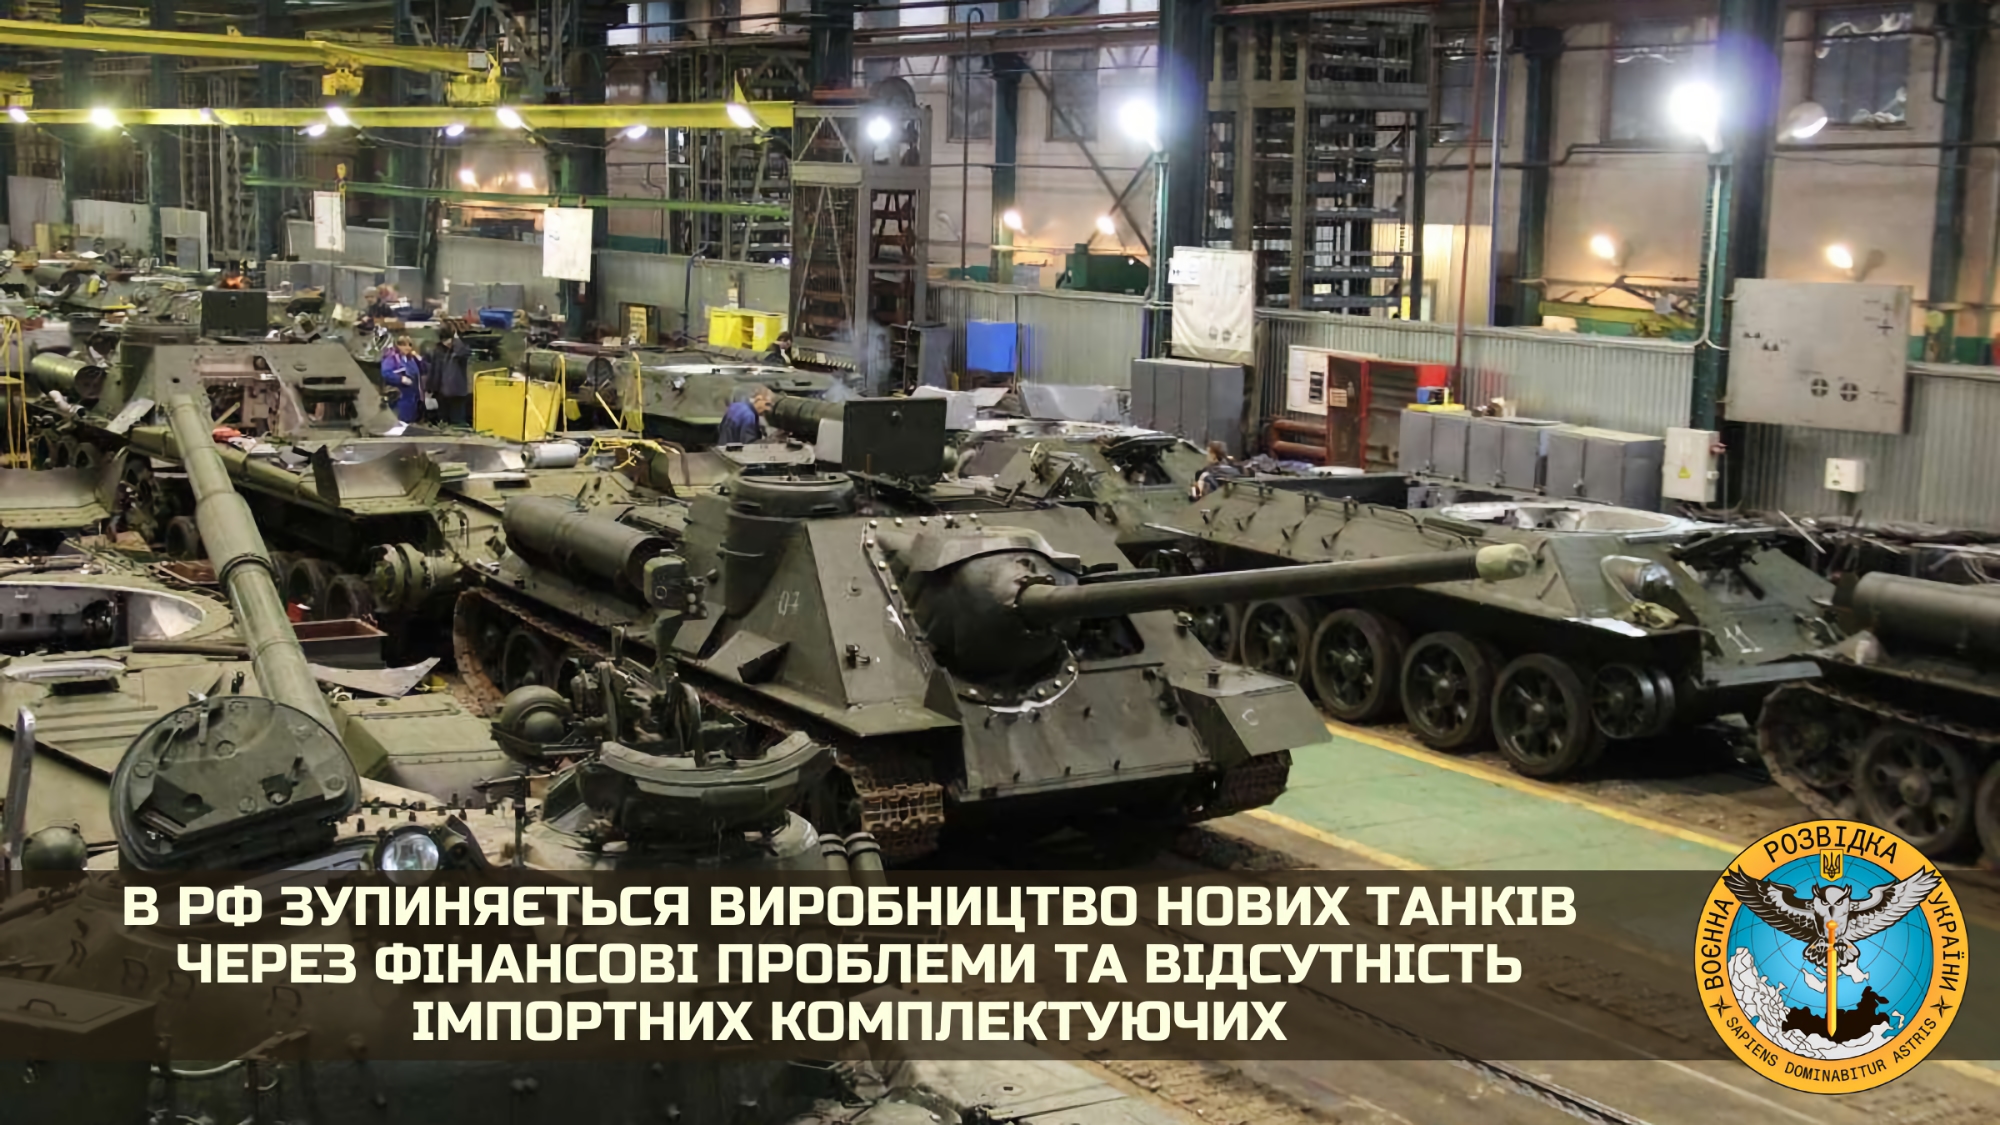 Санкции в действии: в рф остановилось производство танков Т-90 и Т-14 (Армата)